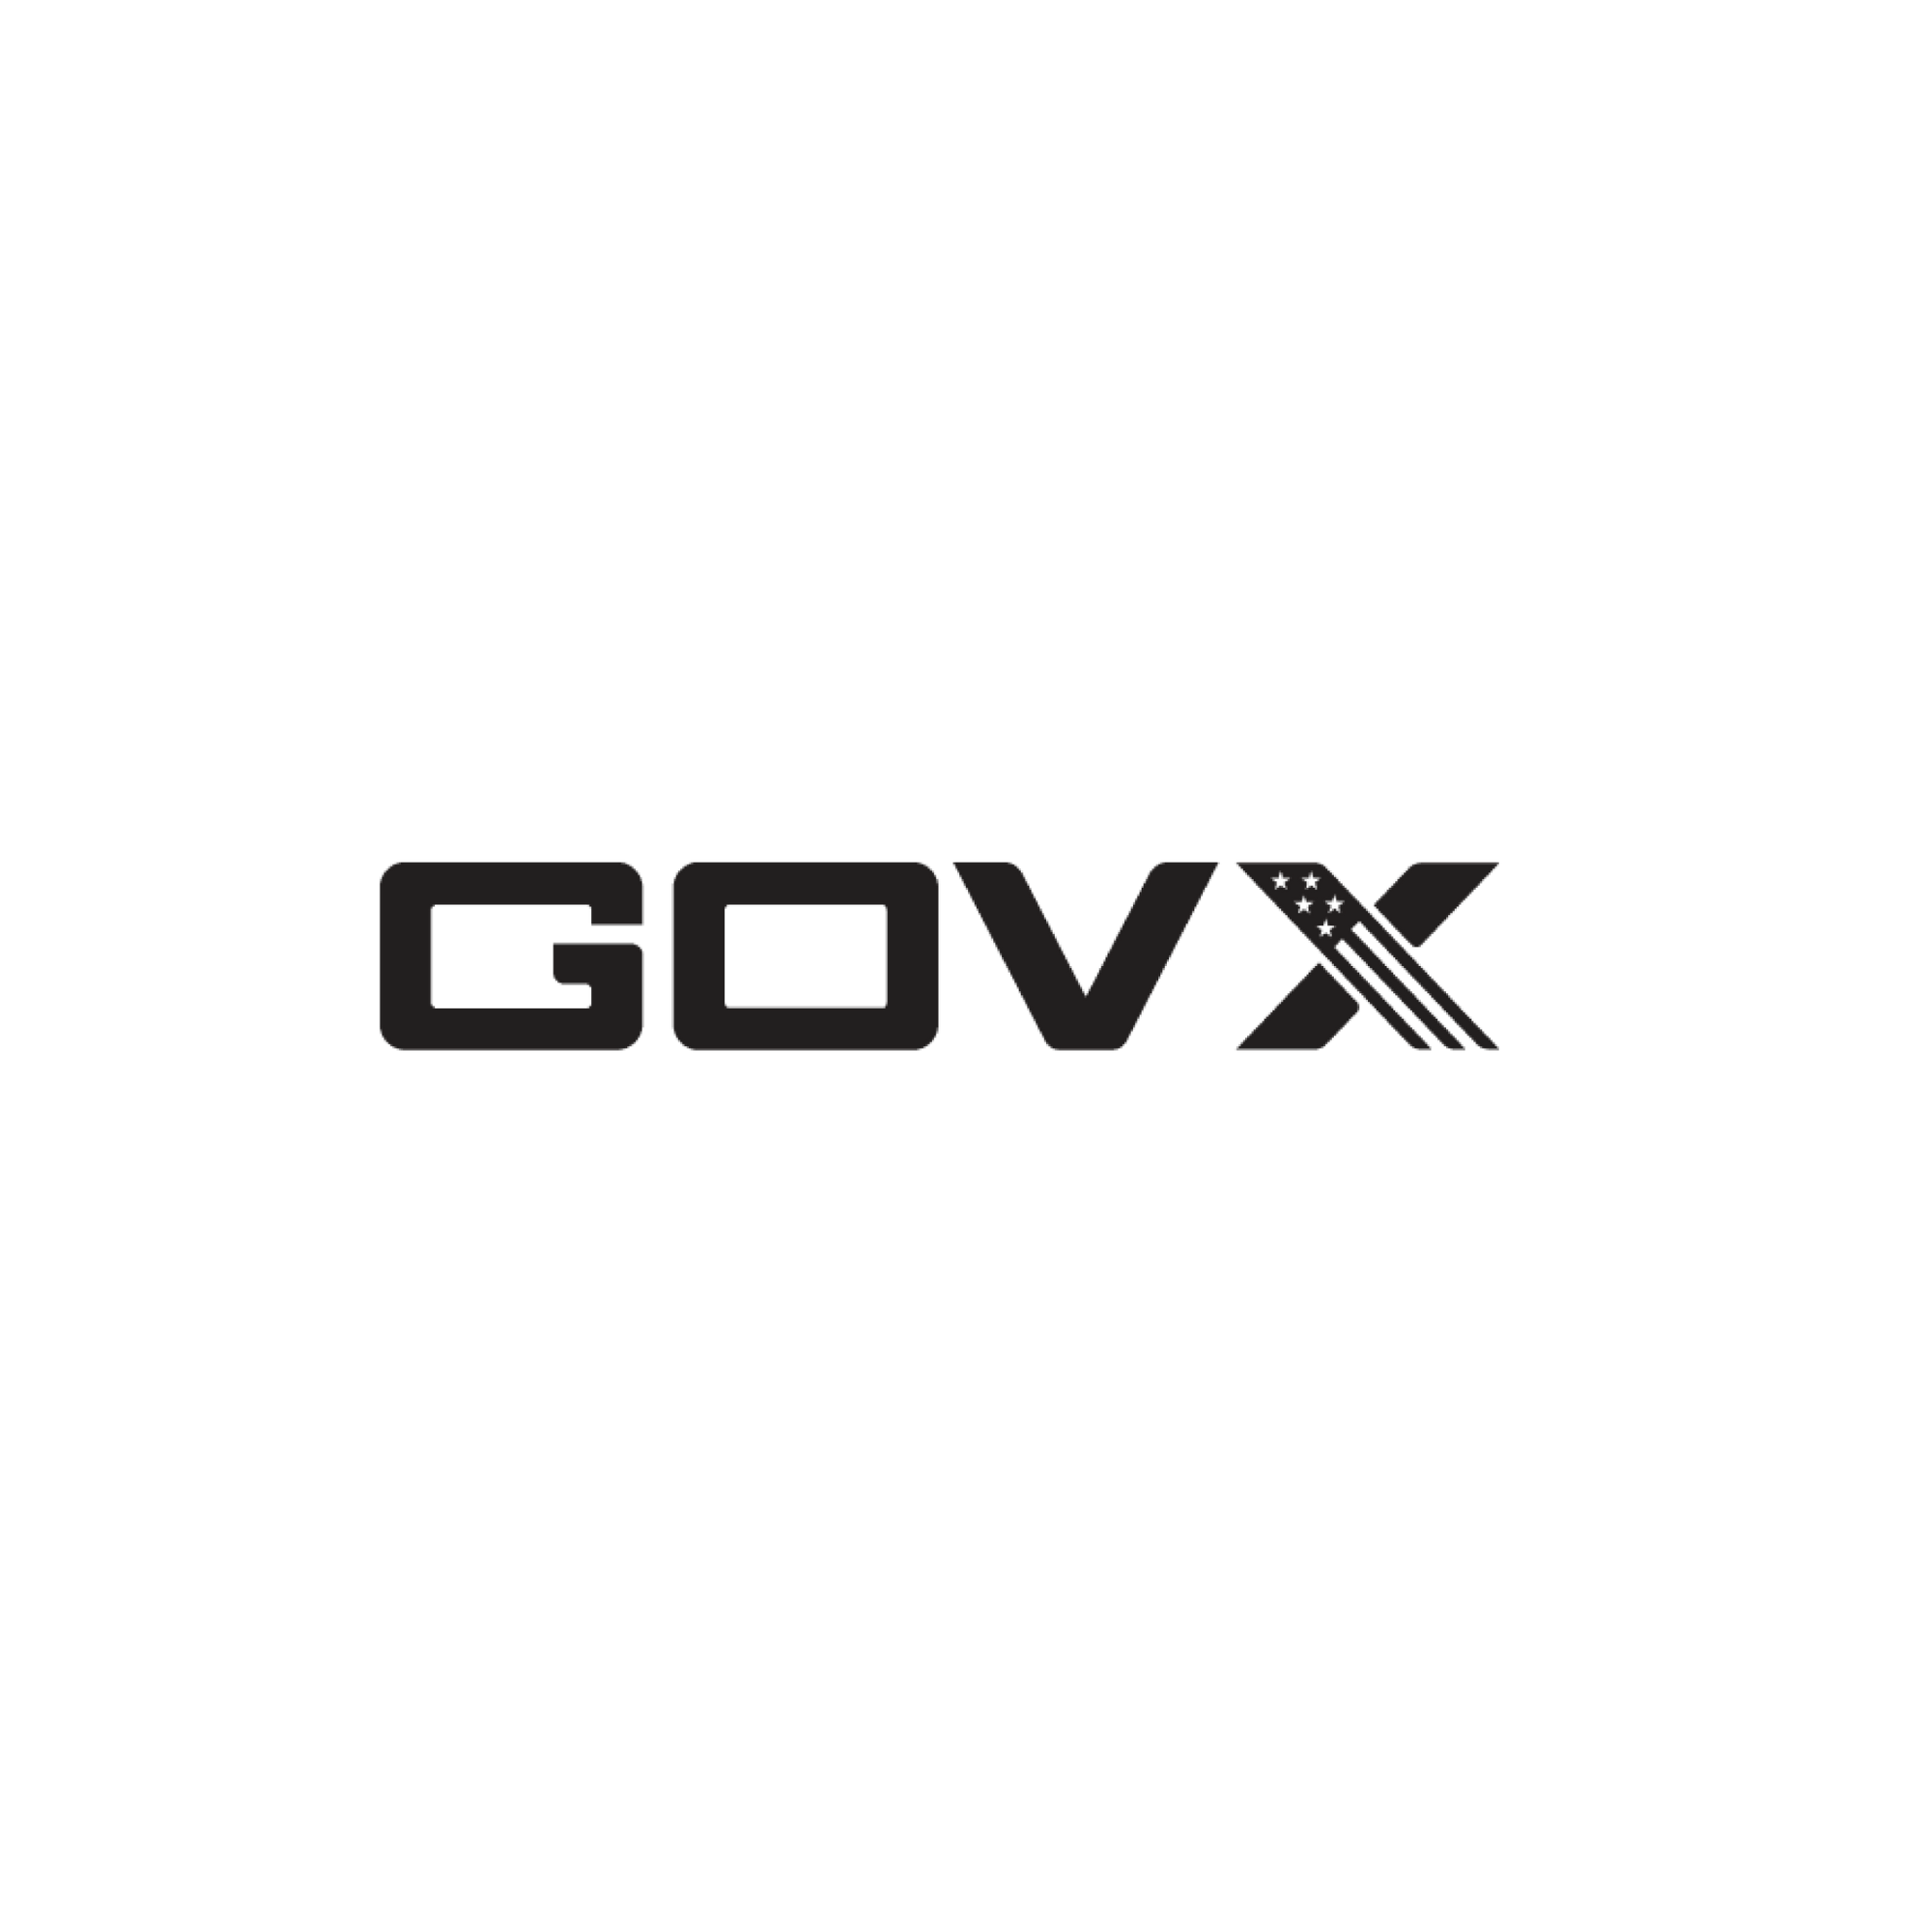 gov x logo